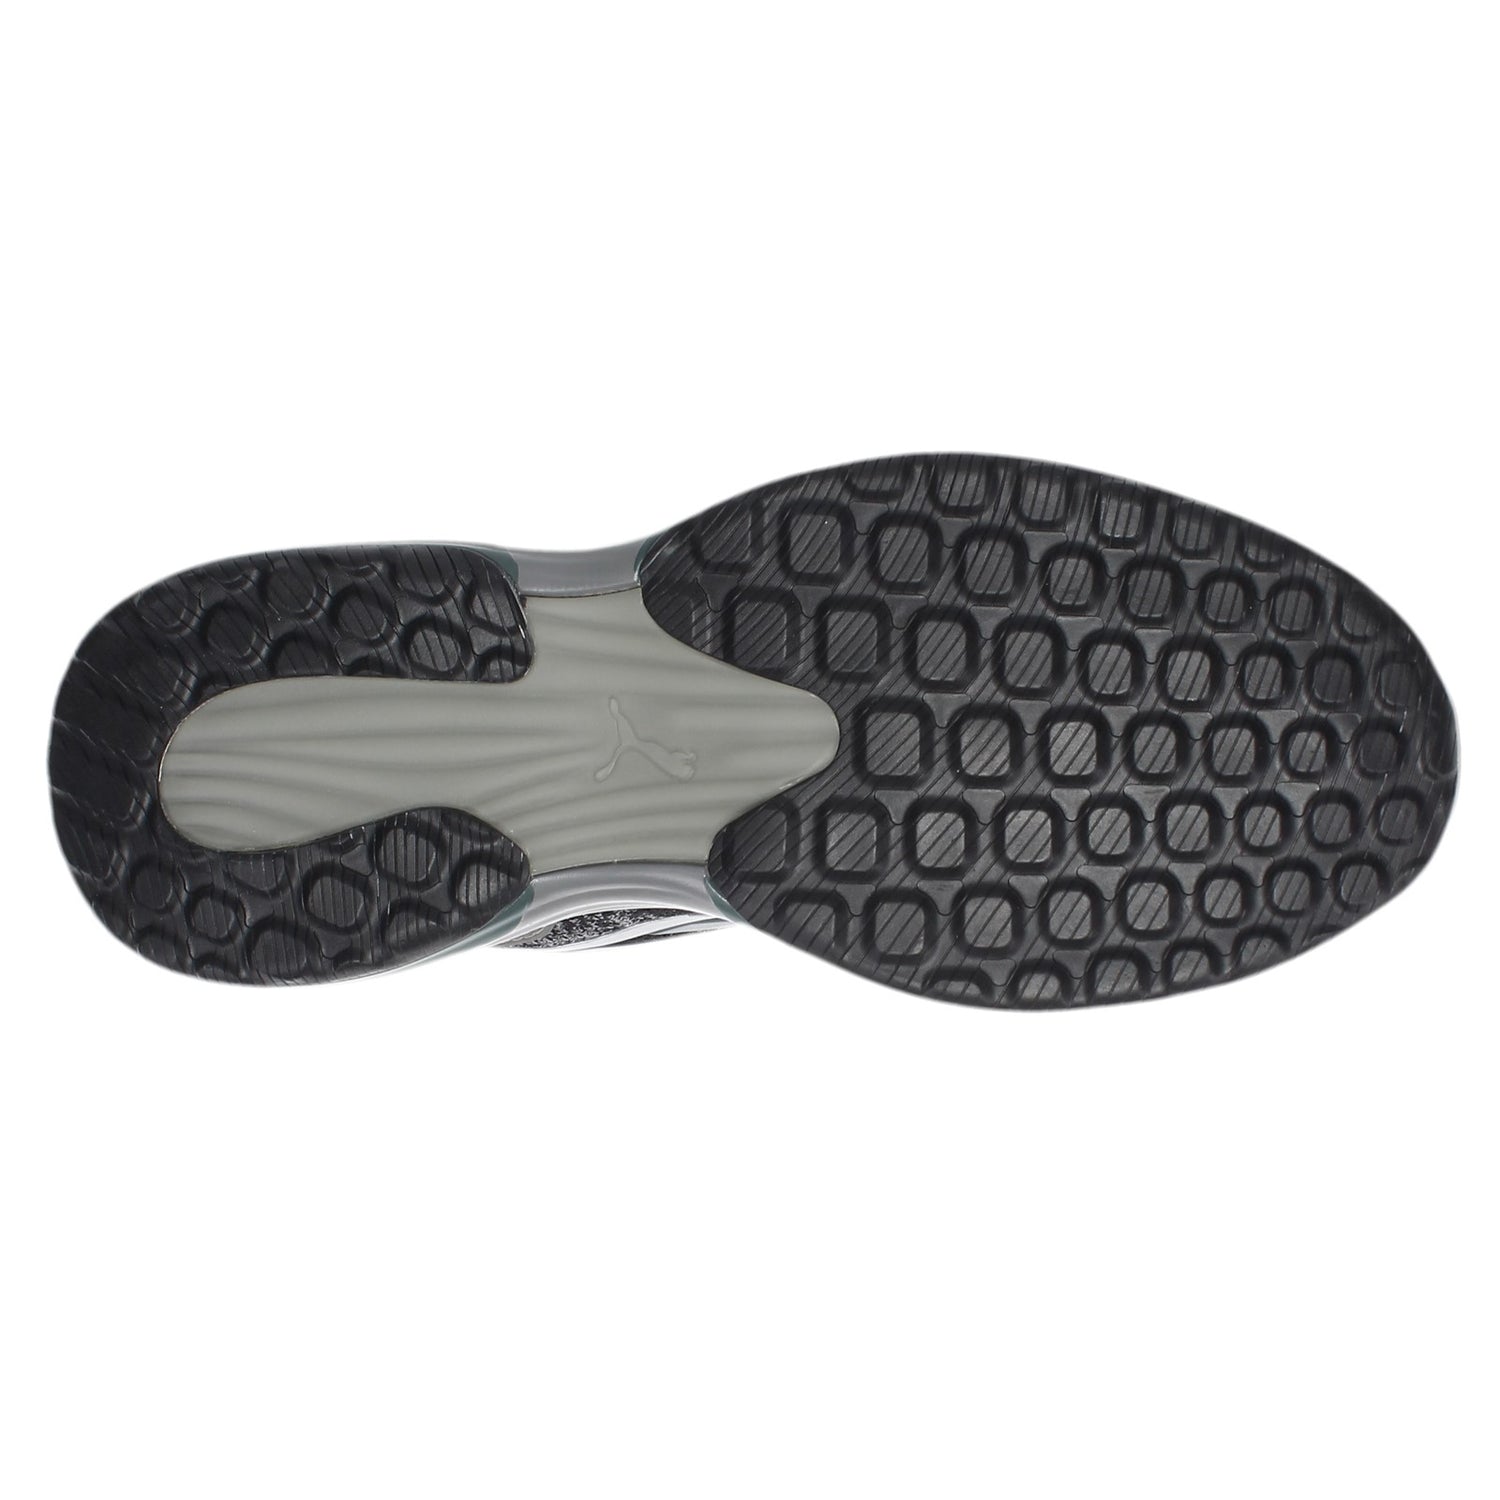 Peltz Shoes  Men's Puma Safety Charge Low Work Shoe BLACK GREY 644545